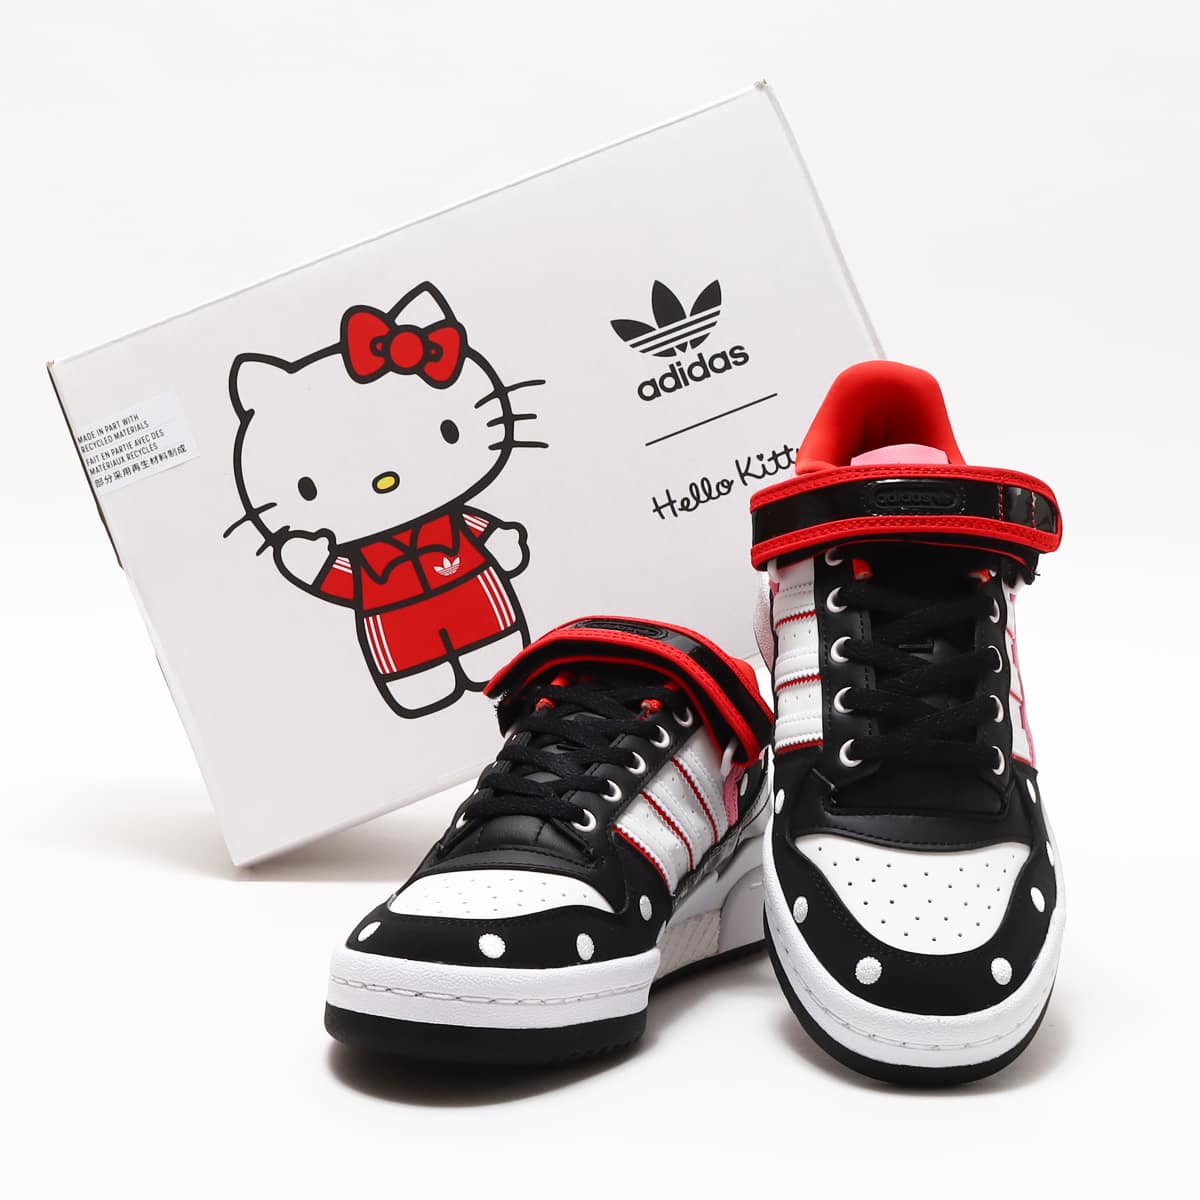 adidas Originalas Hello Kitty Collection